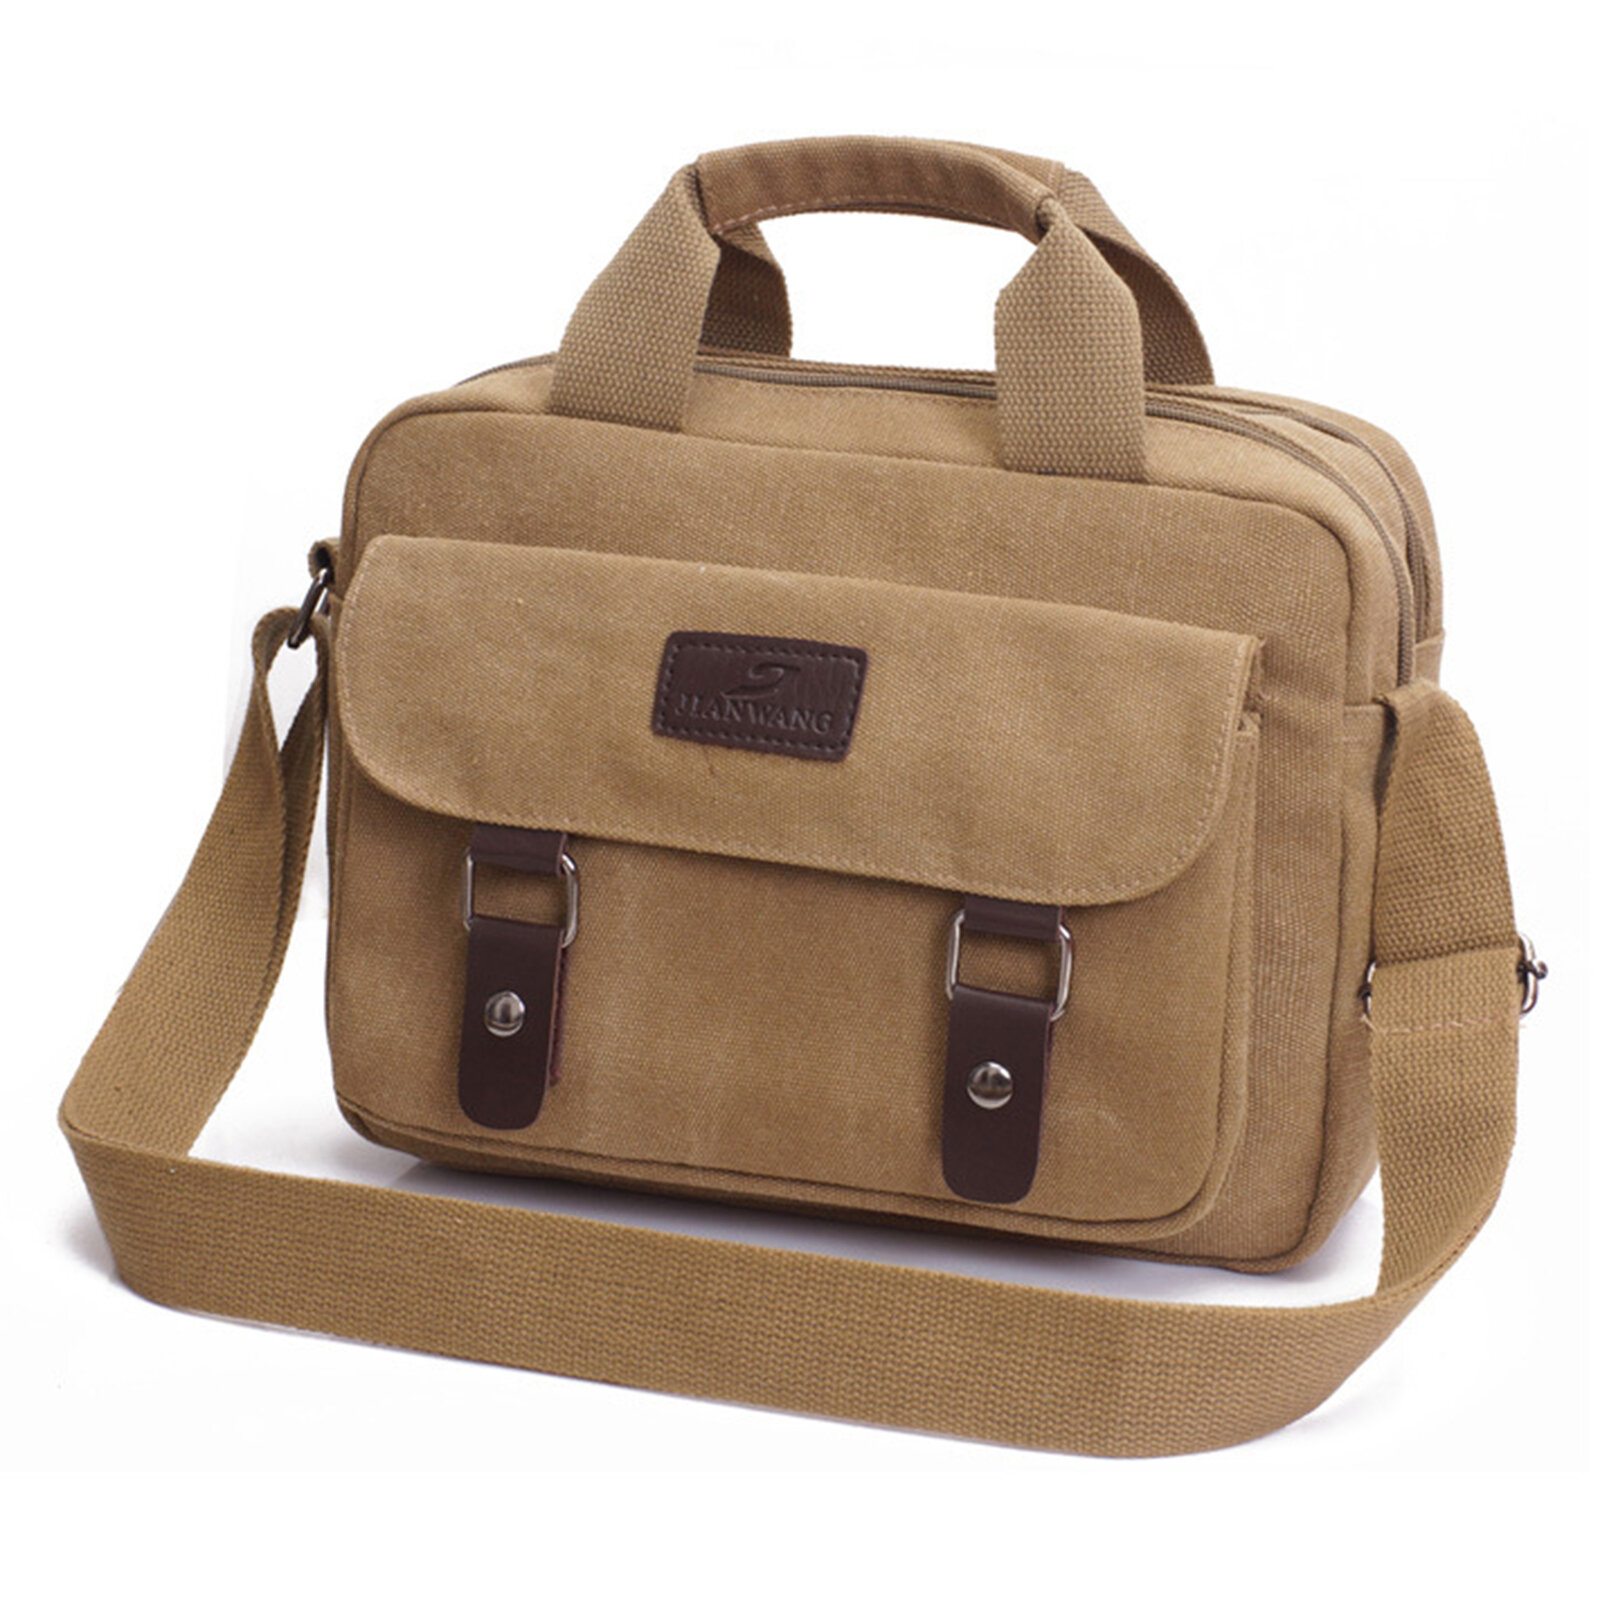 Menico Men Canvas Outdoor Casual Large Capacity Wear-resistant Zipper Handbag Shoulder Bag Messenger Bag